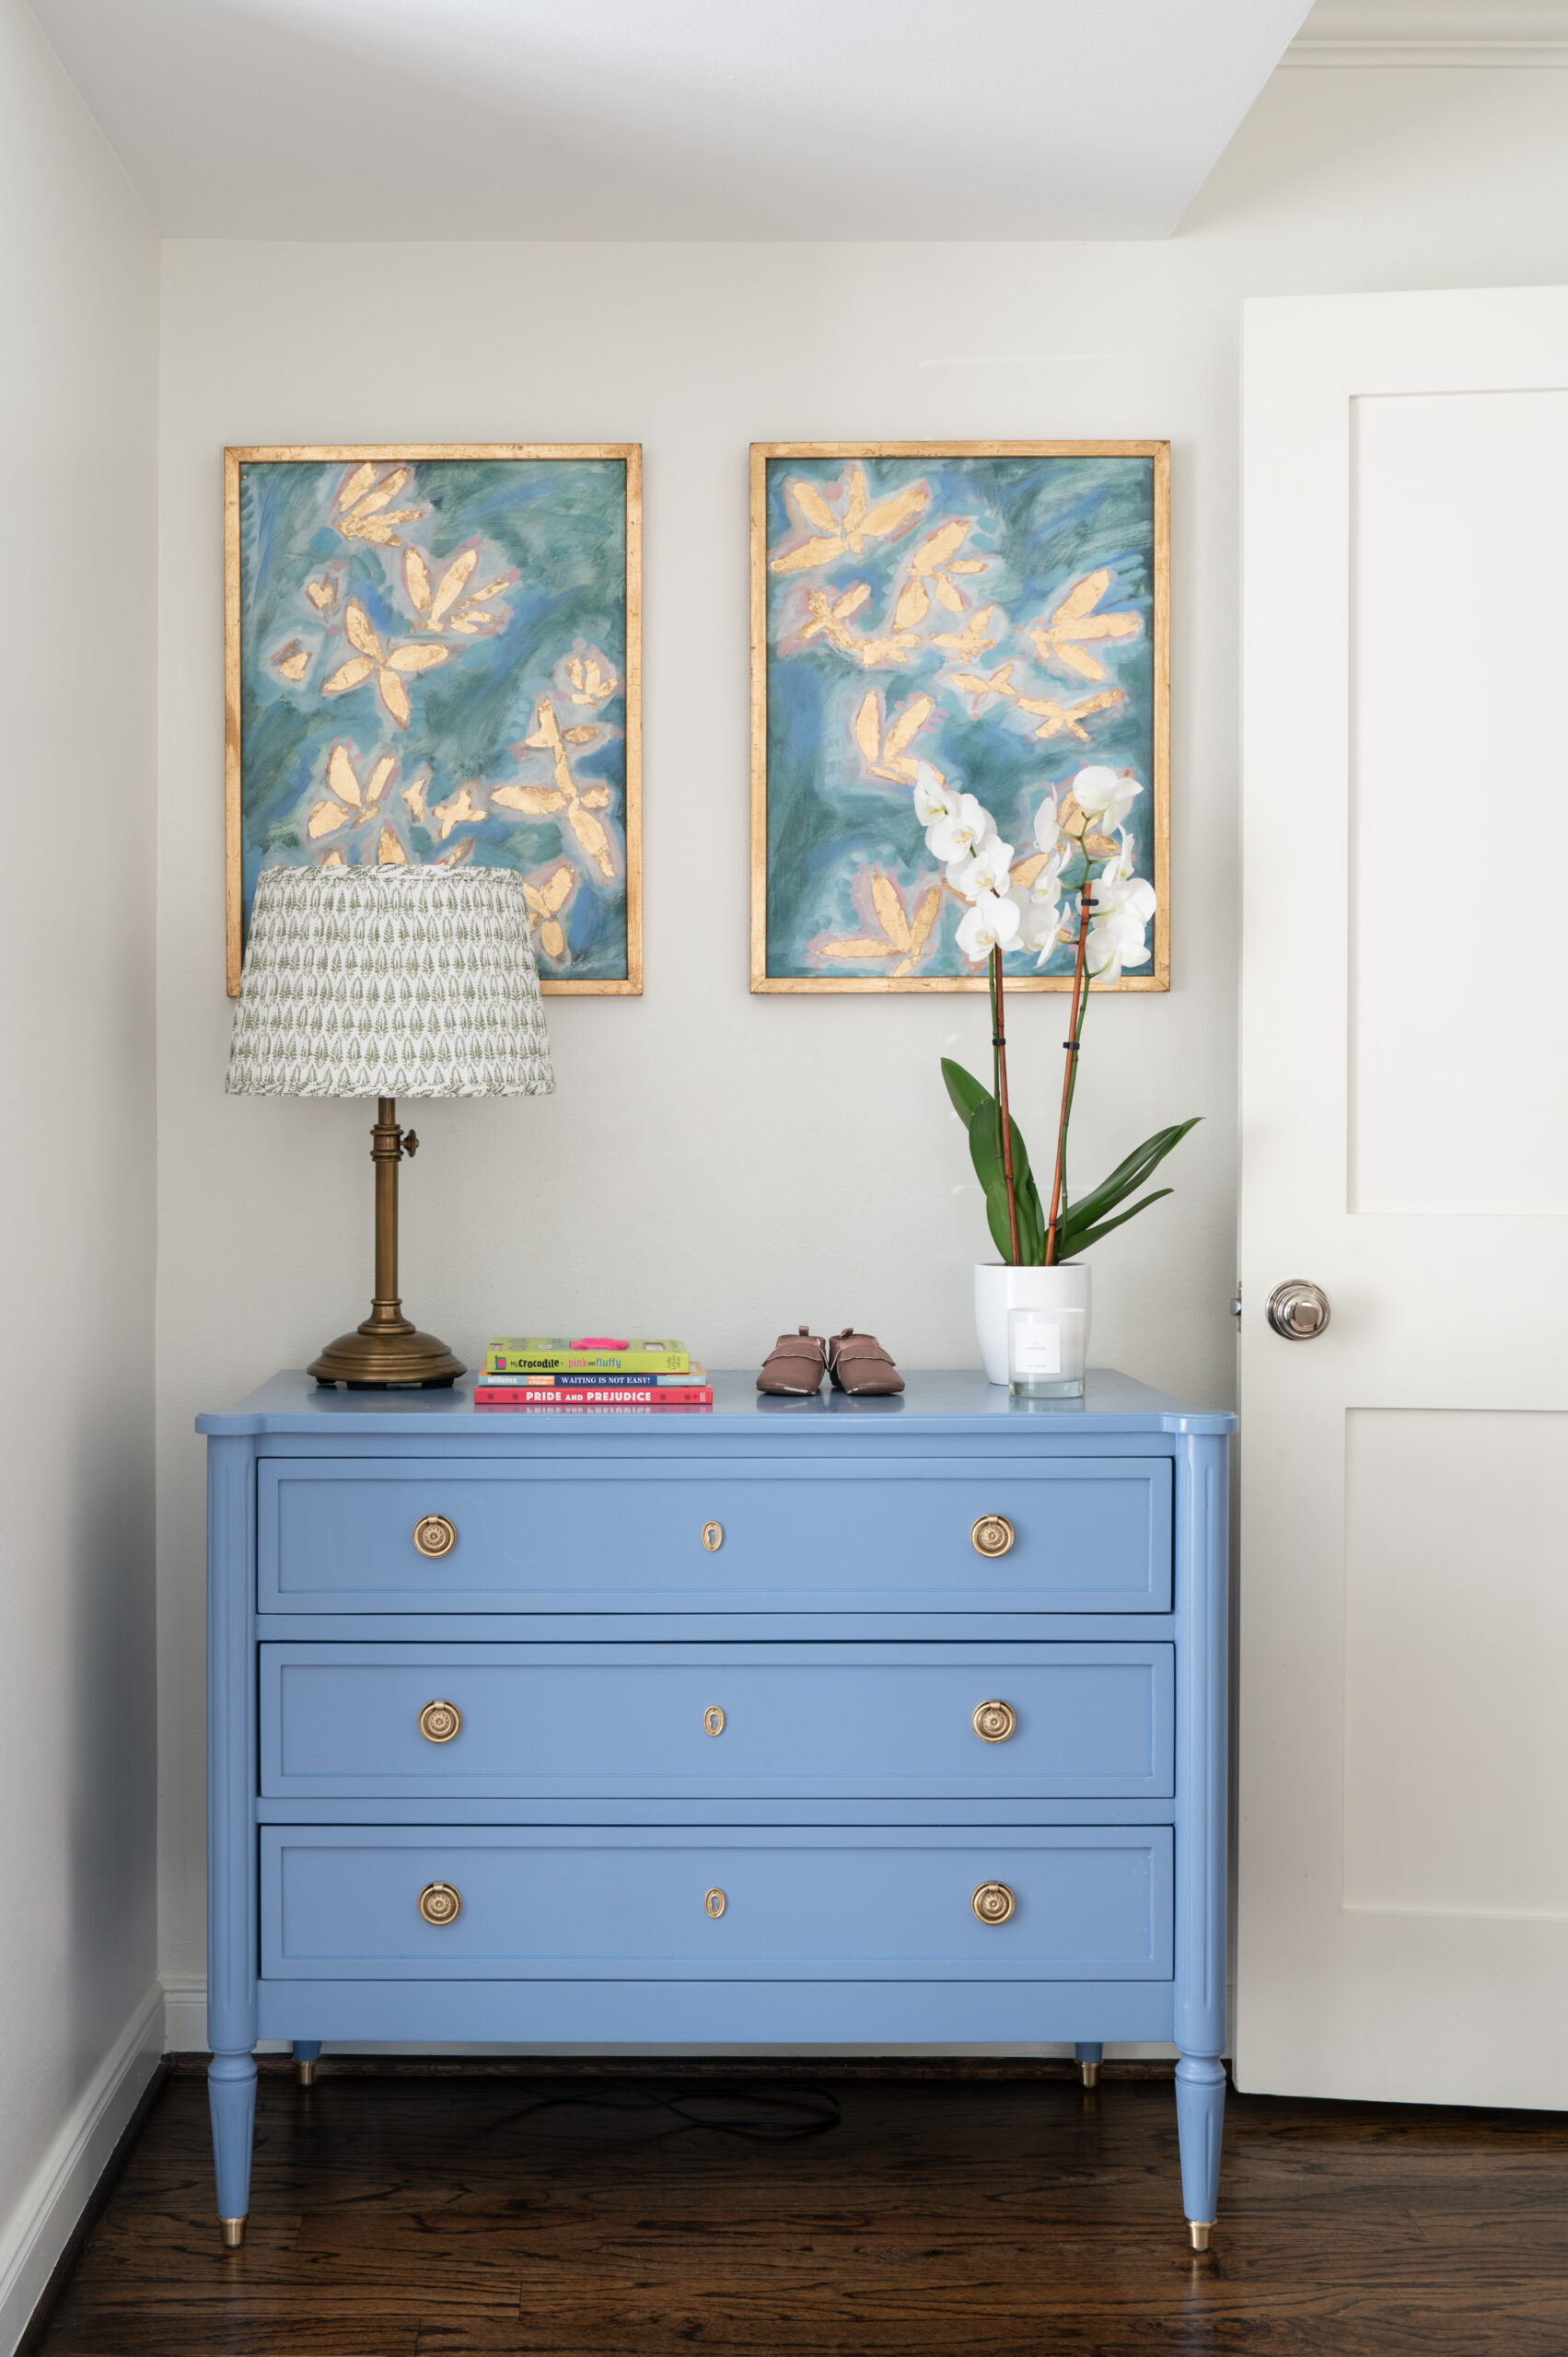 Southern bedroom interior design and decor of a blue dresser